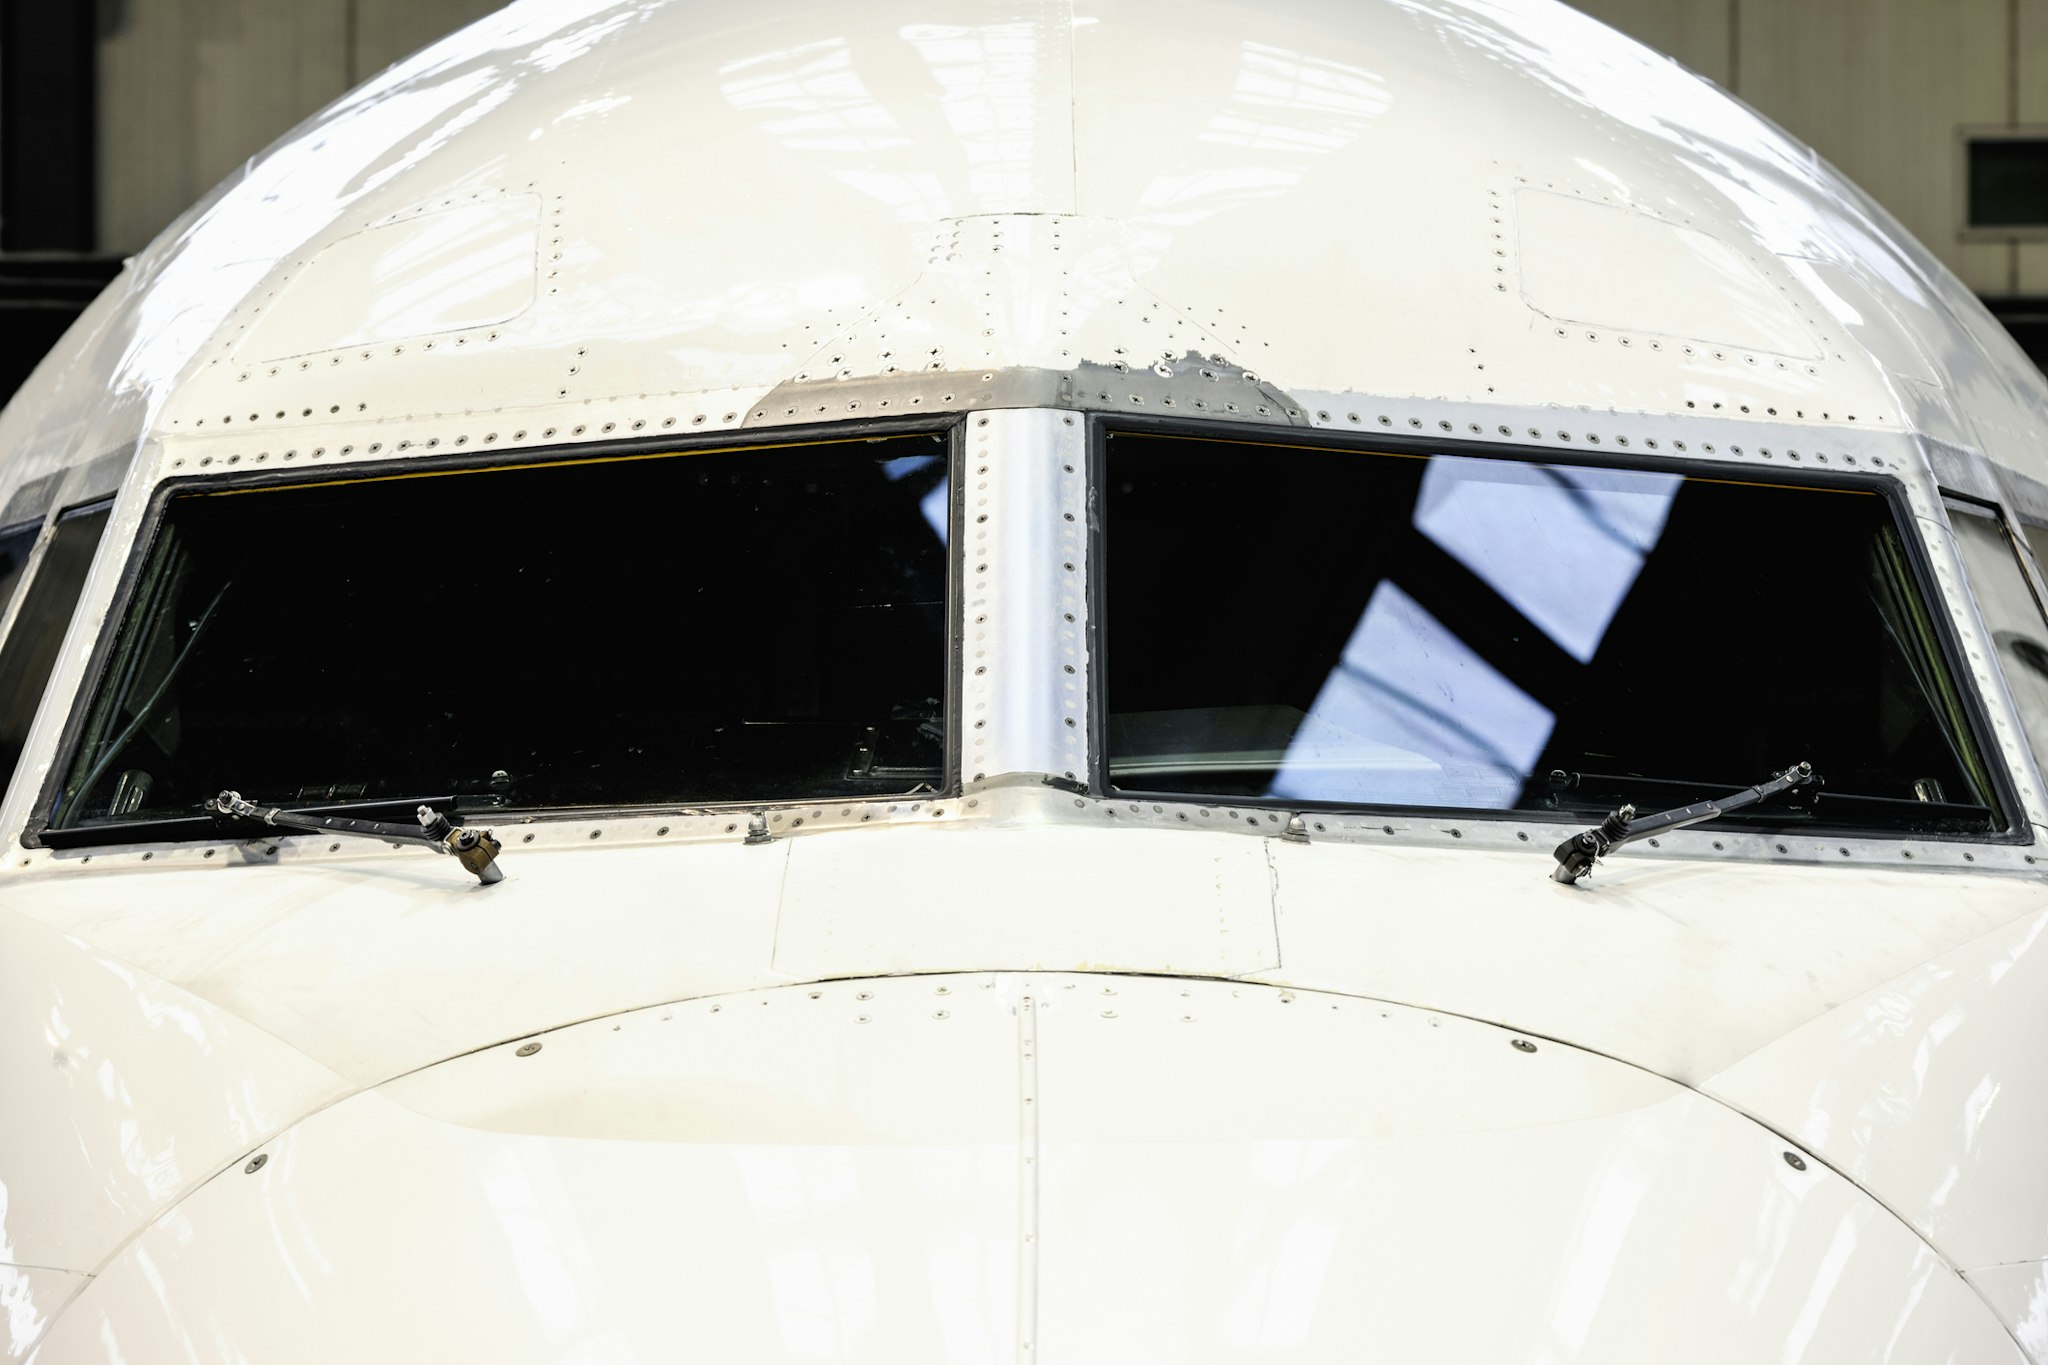 Cockpit windows of a Boeing B737 passenger jet.